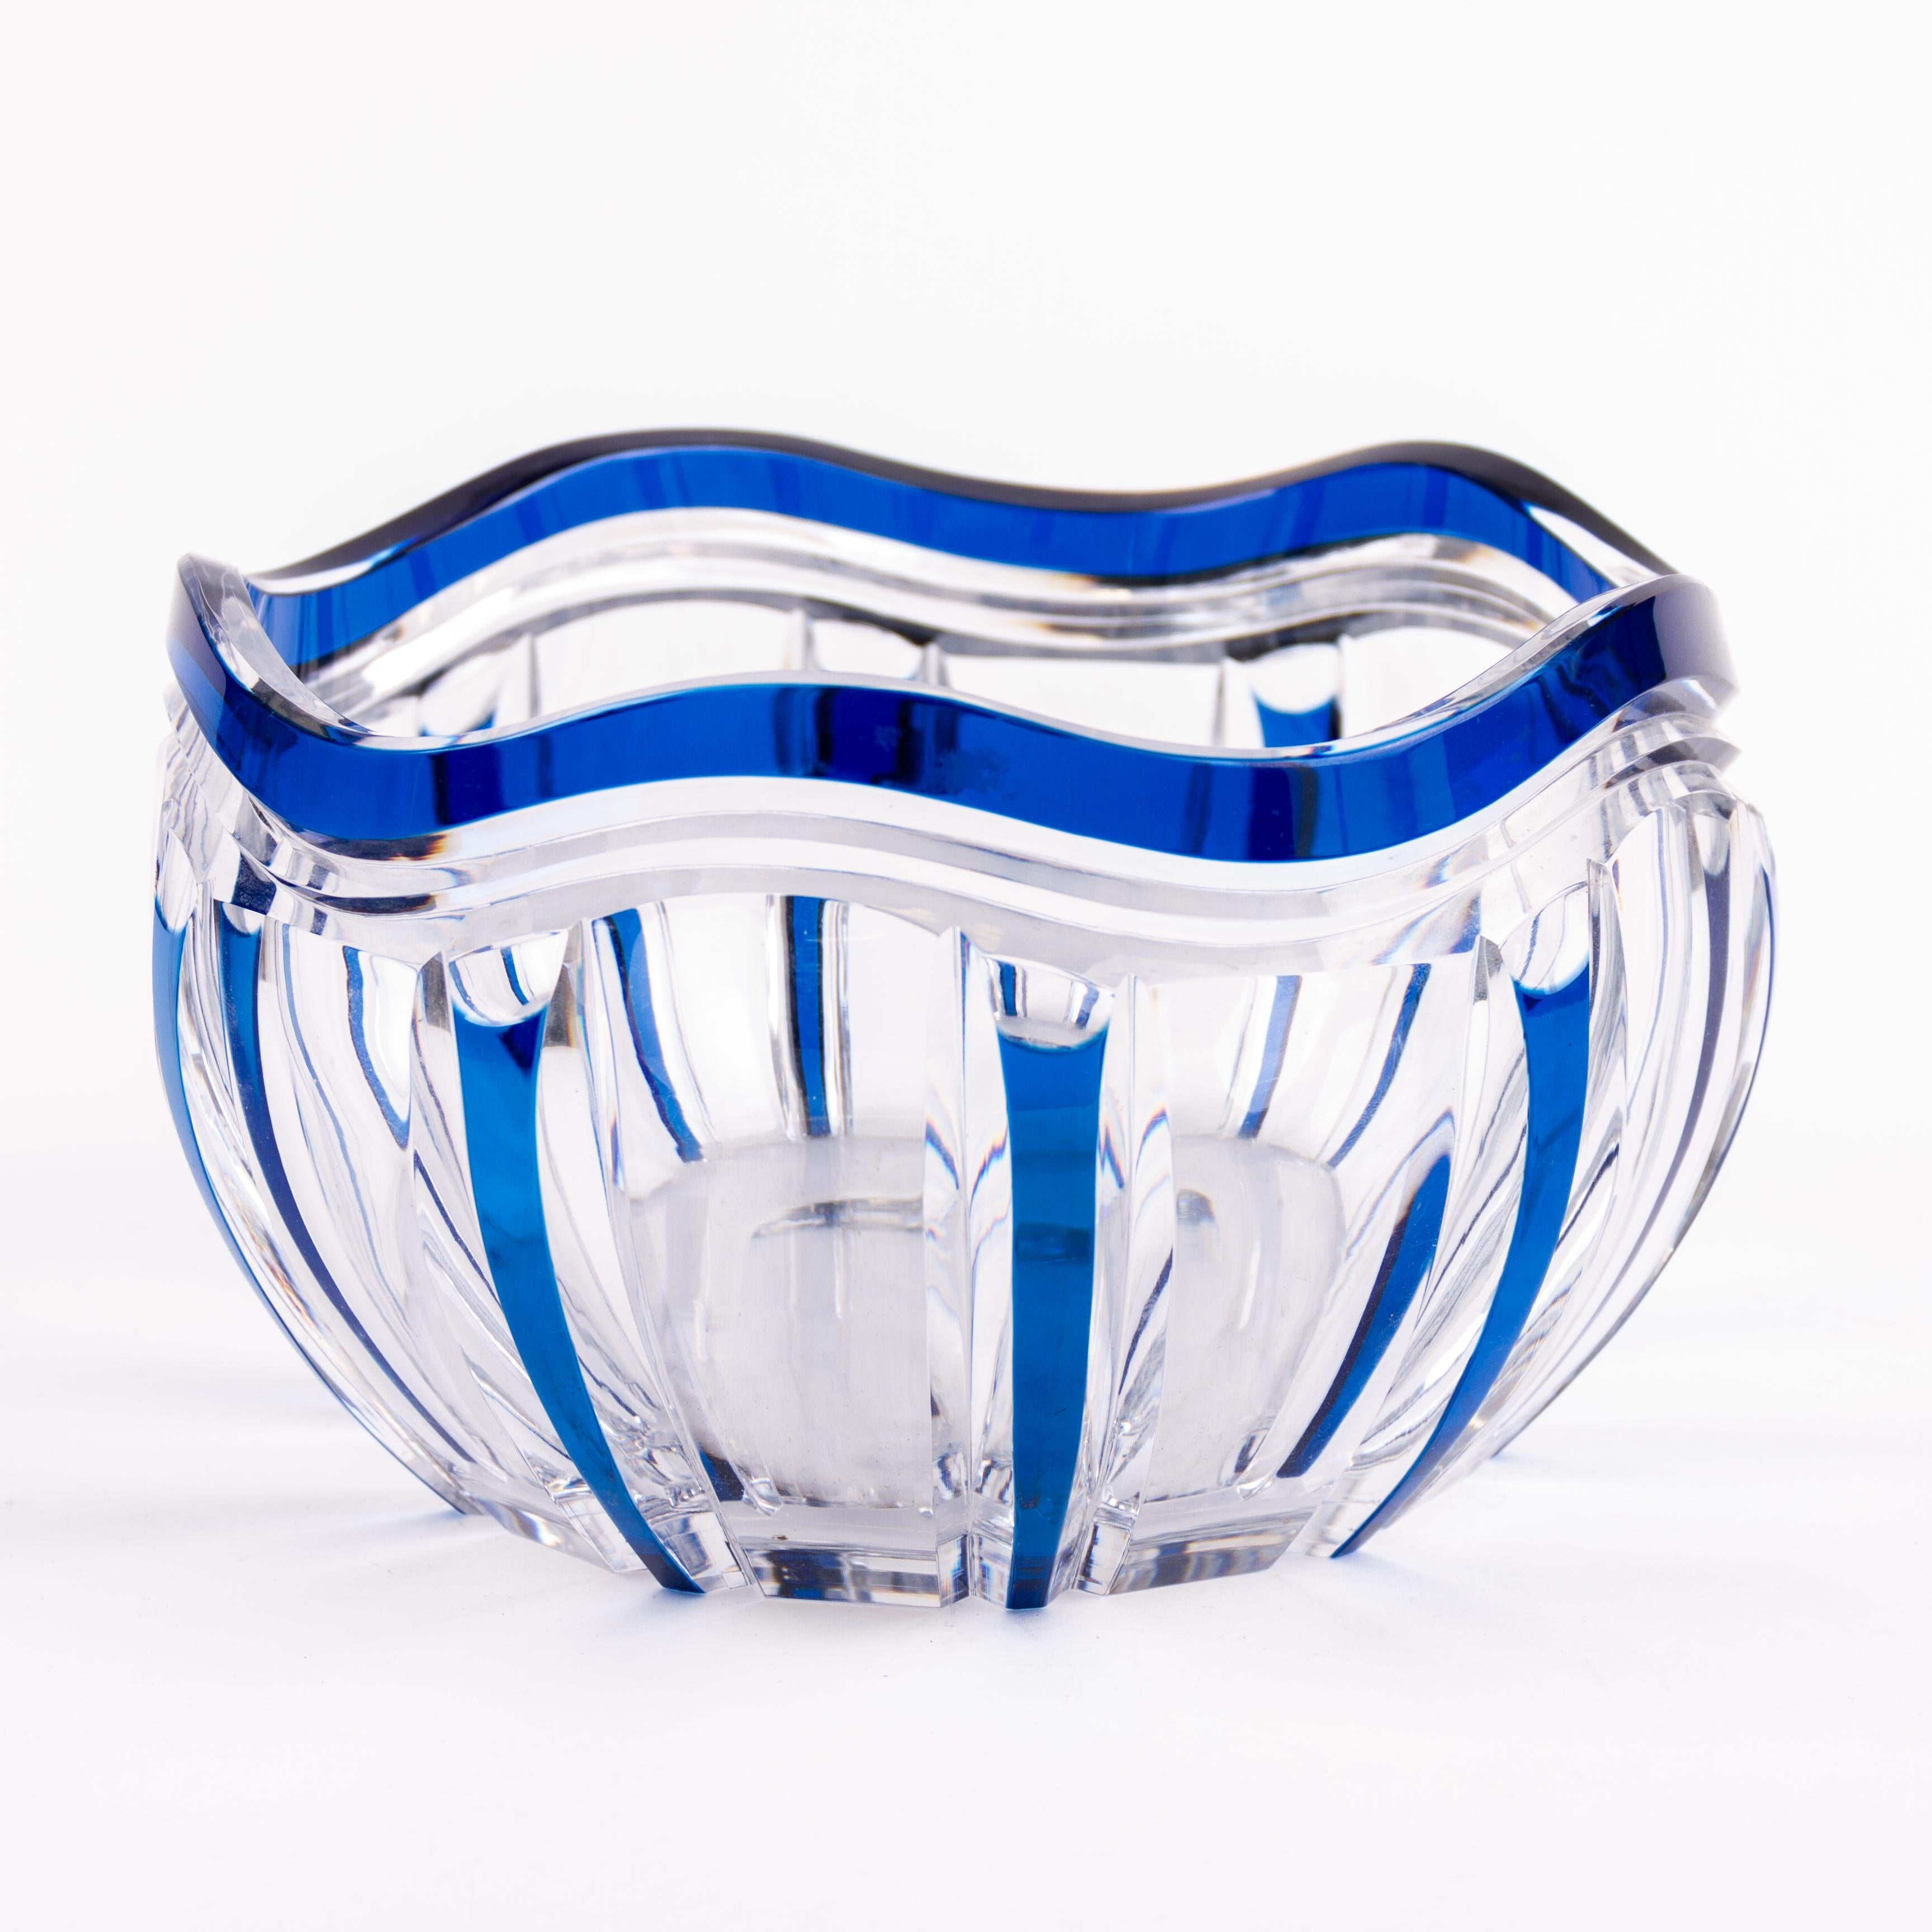 Val St Lambert Art Deco Belgian Centrepiece Crystal Glass Bowl by Joseph Simon
Good condition
Free international shipping.